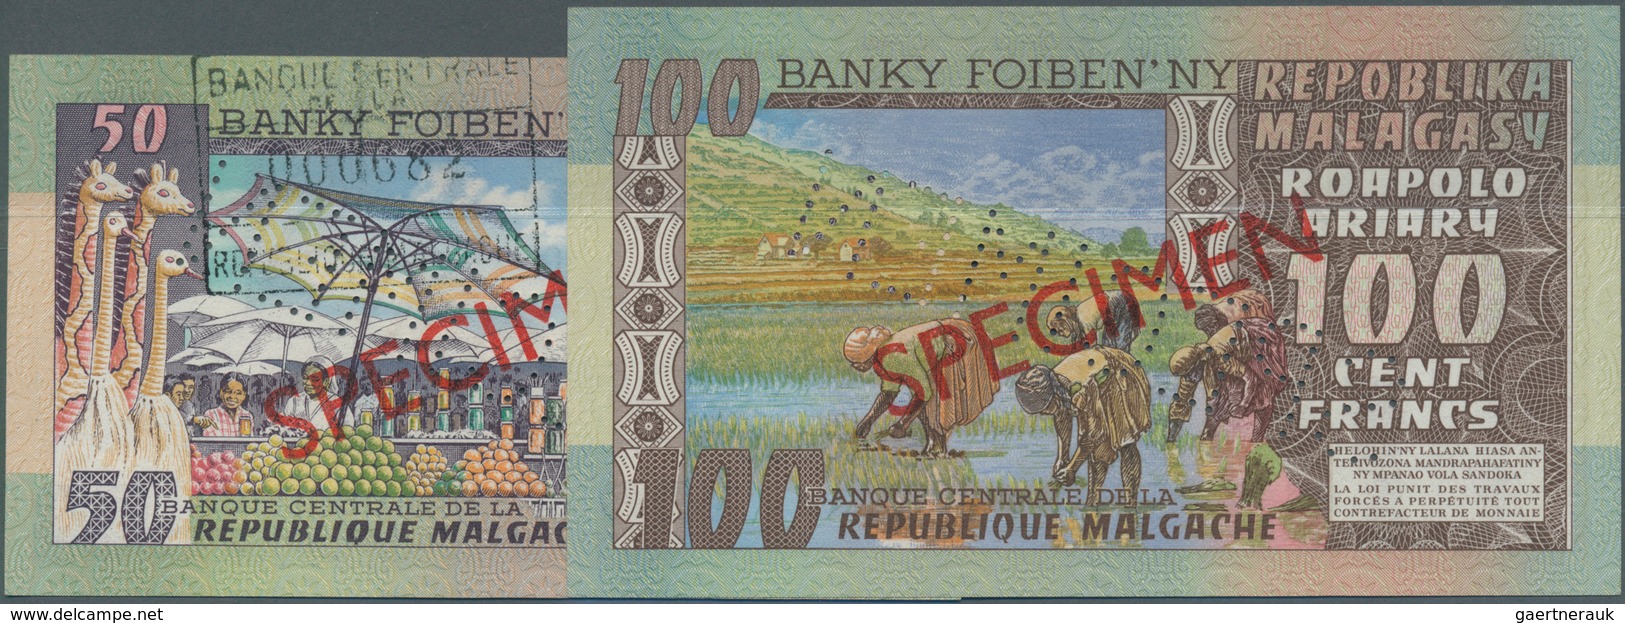 Madagascar: Set Of 2 SPECIMEN Banknotes Containing 50 & 100 Ariary ND Specimen P. 62, 63s, Both With - Madagascar